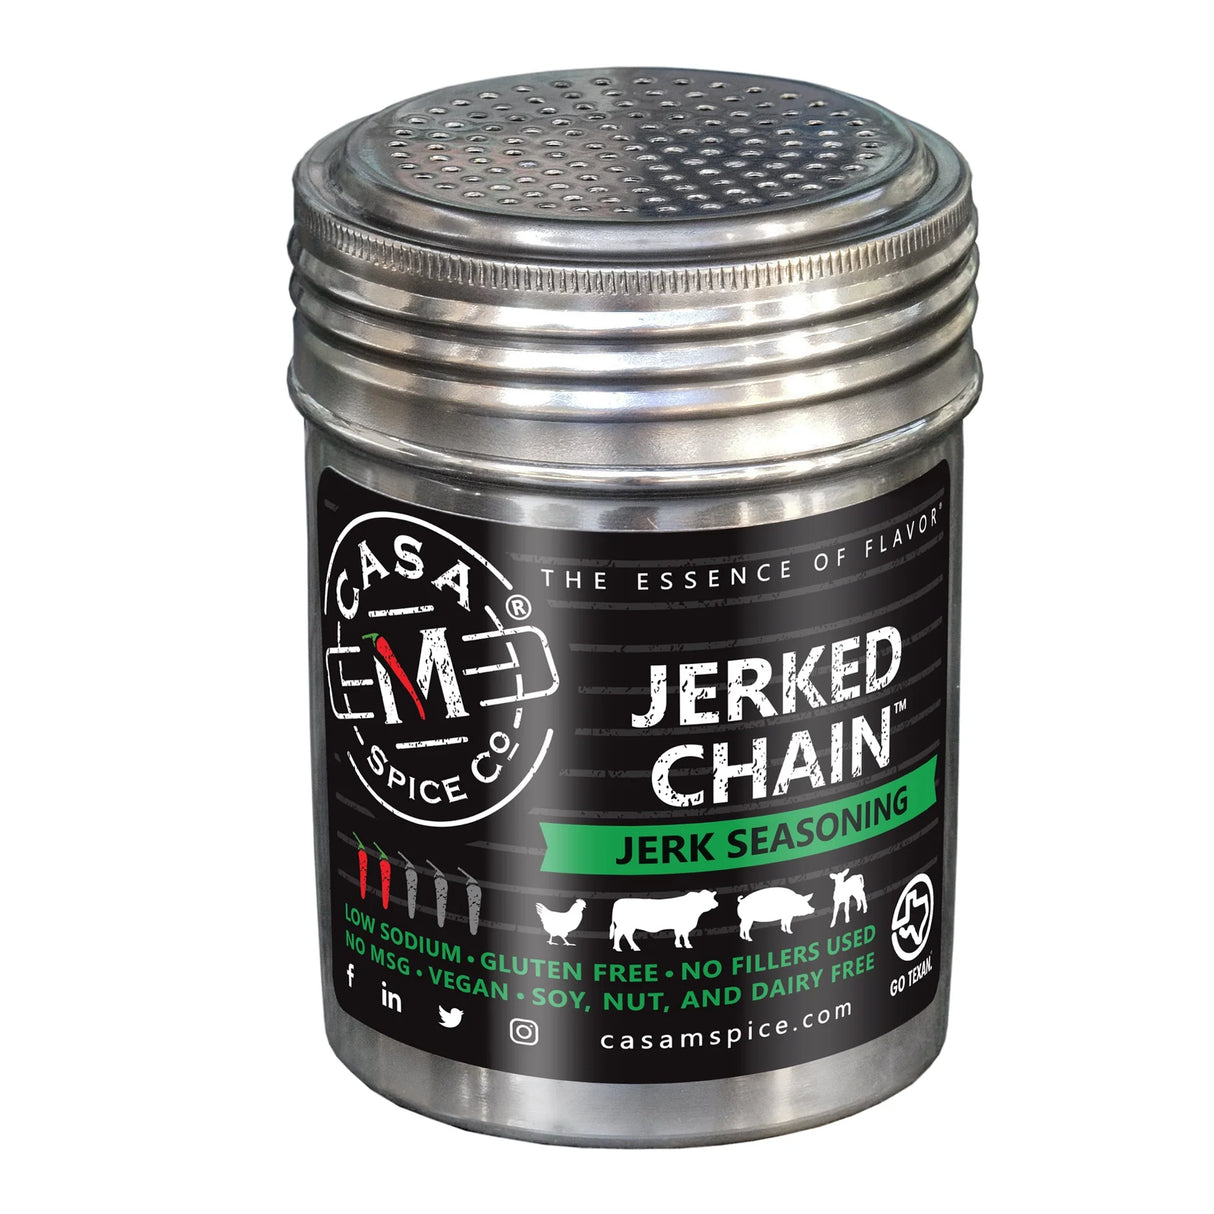 Jerked Chain Jerk Seasoning - Stainless Steel Shaker